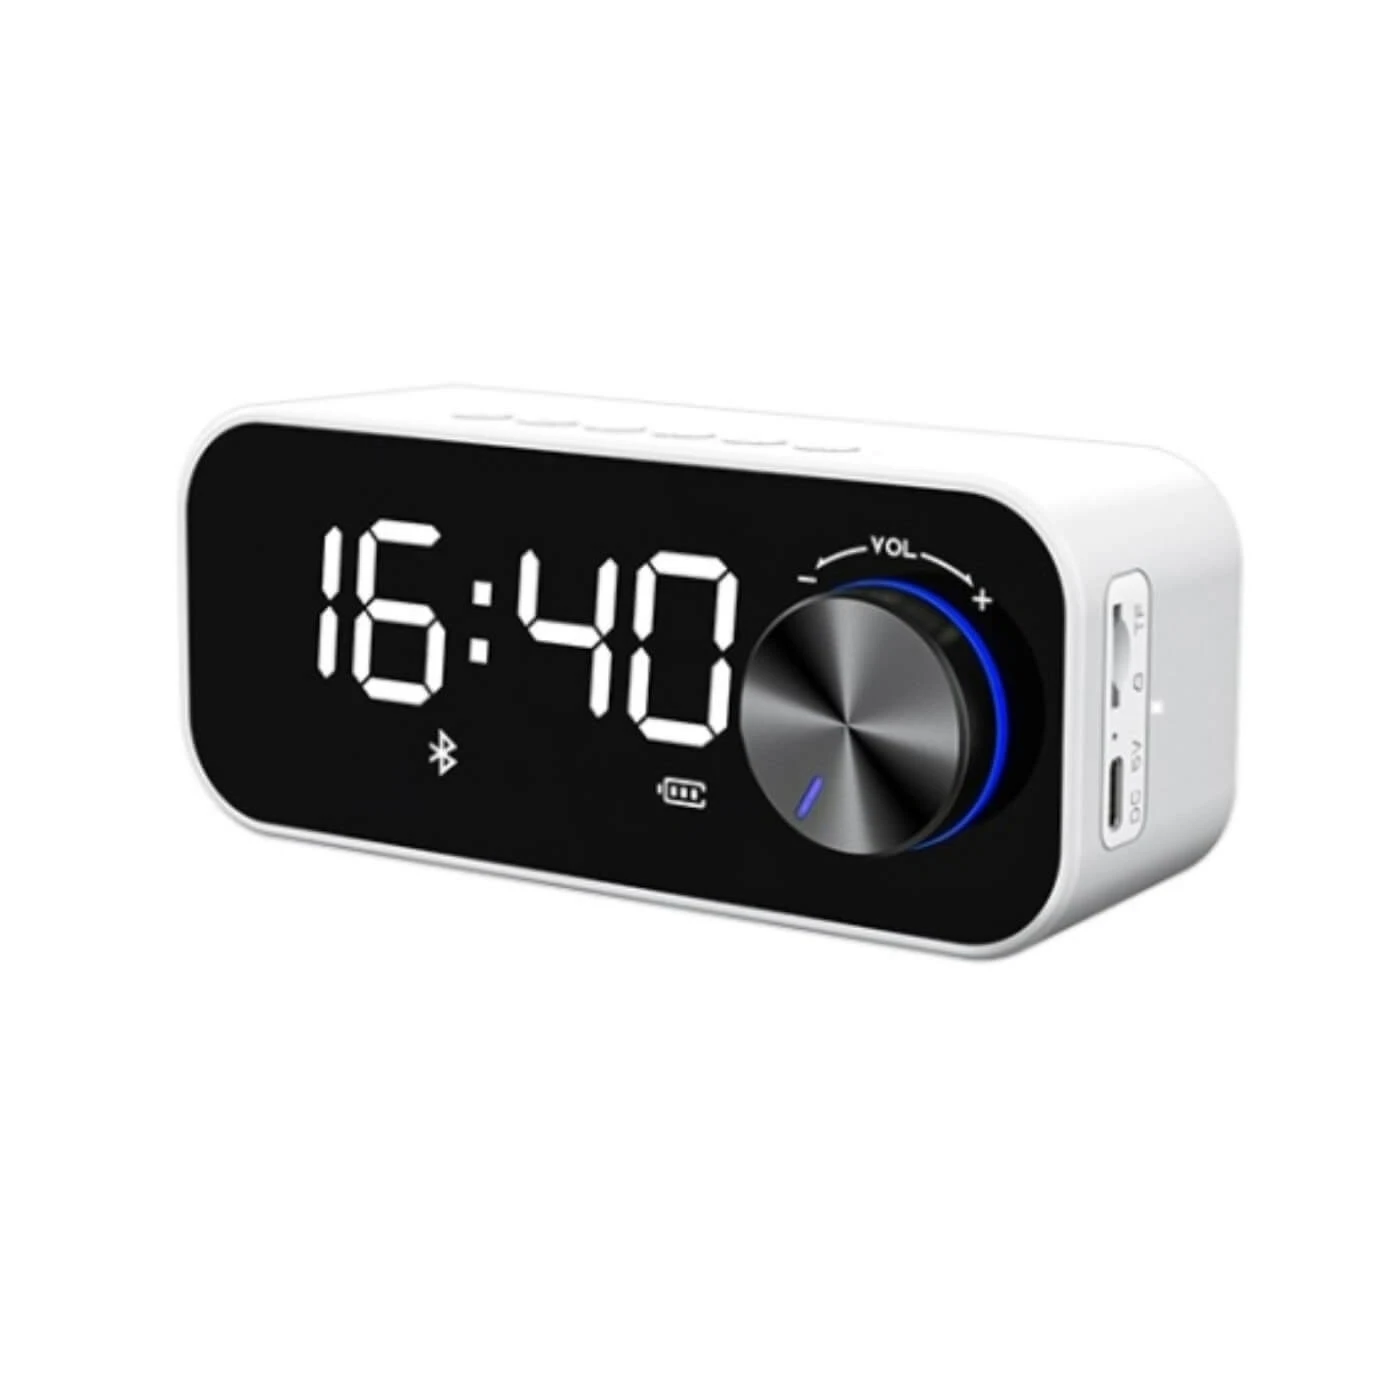 RECCI RSK-W11 Wireless Speaker With Alarm Clock